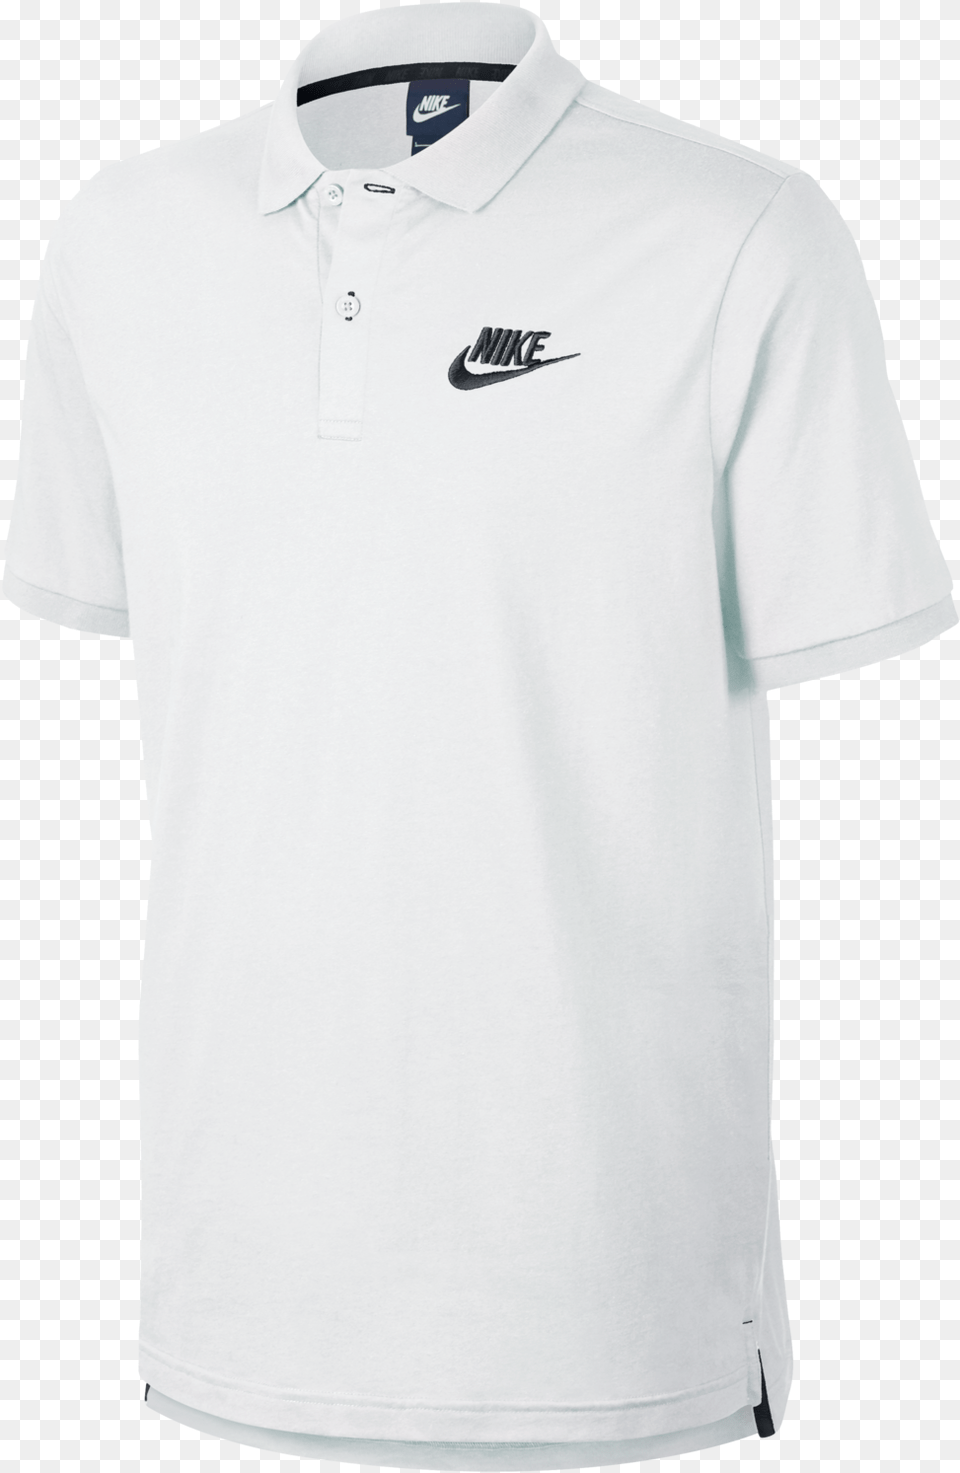 Camisas Con Cuello Nike, Clothing, Shirt, T-shirt Free Png Download